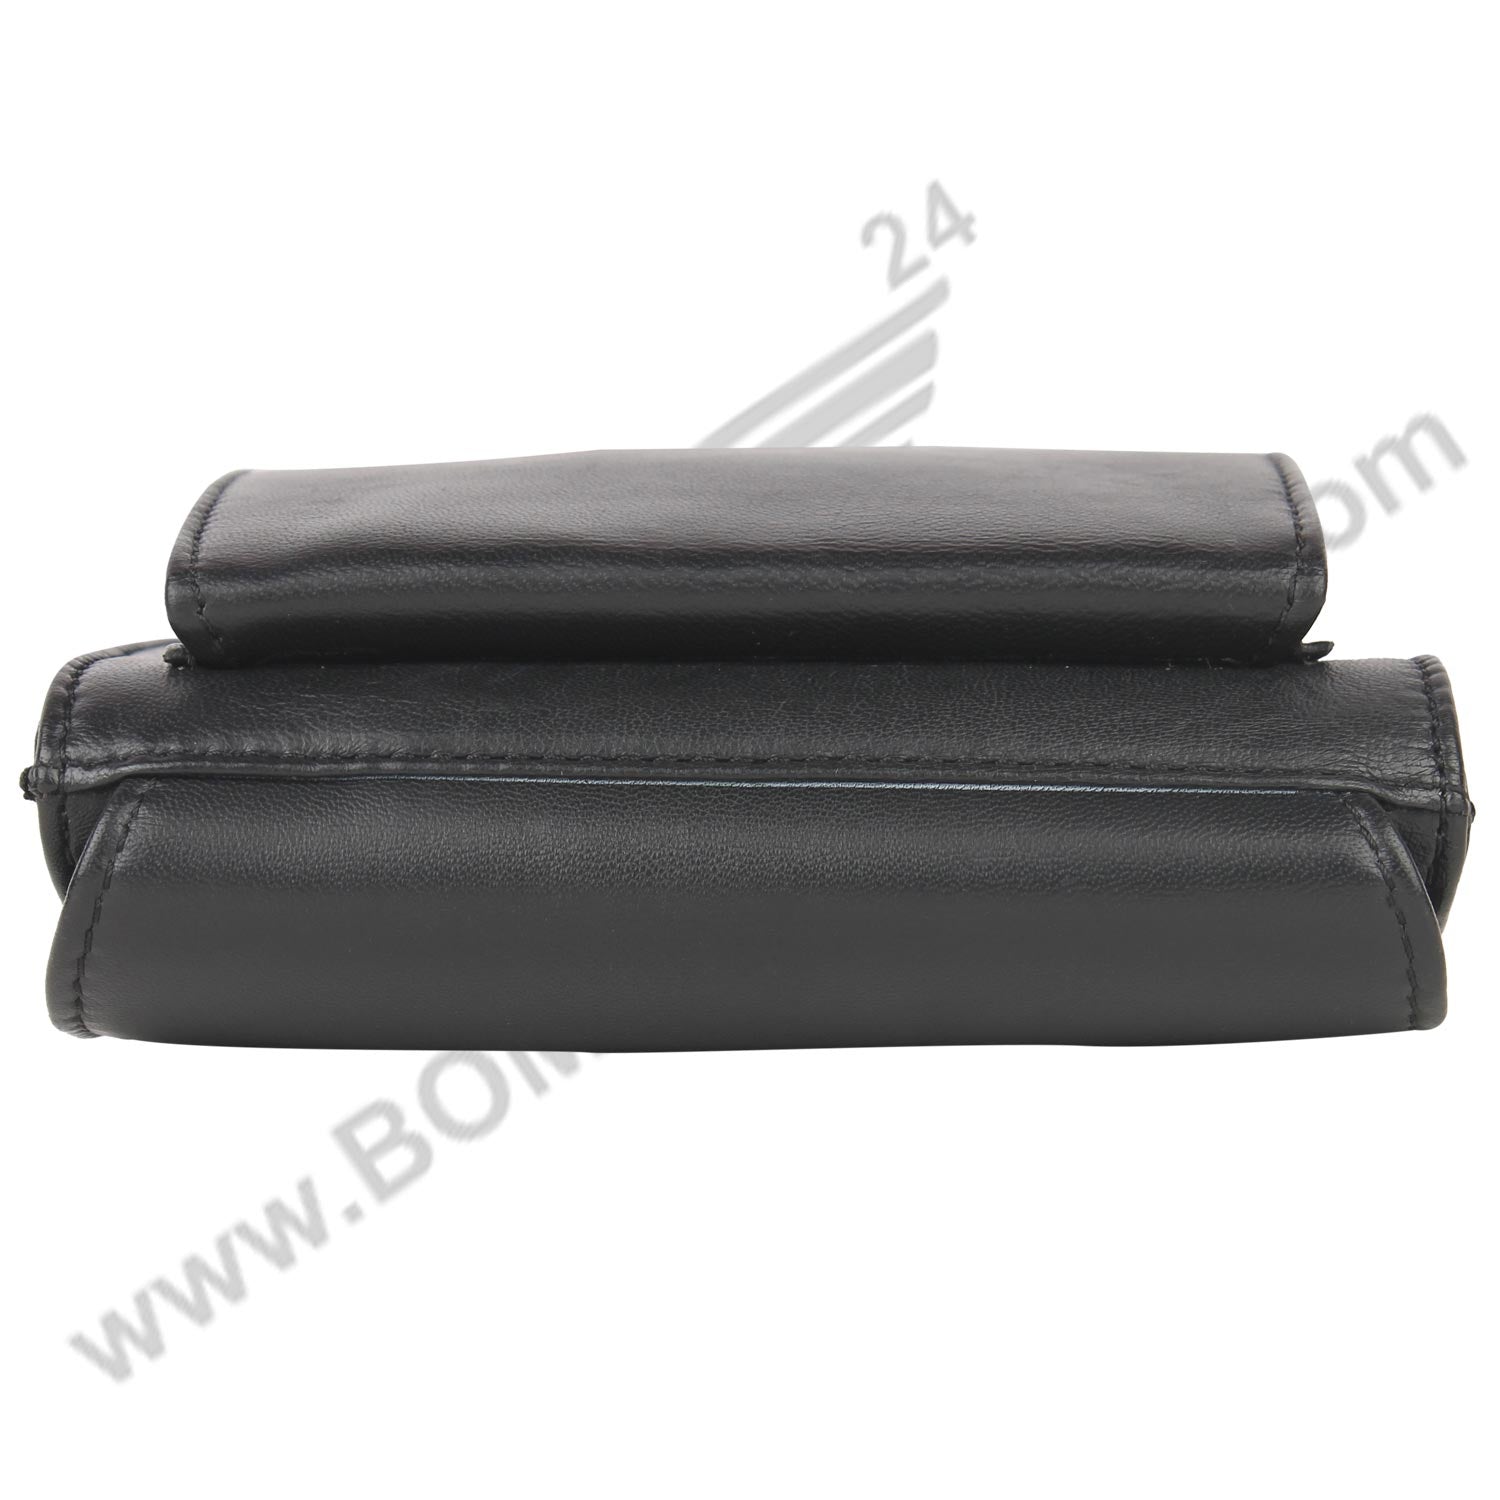 Bottom angled image of black sling bag , It look spacious.